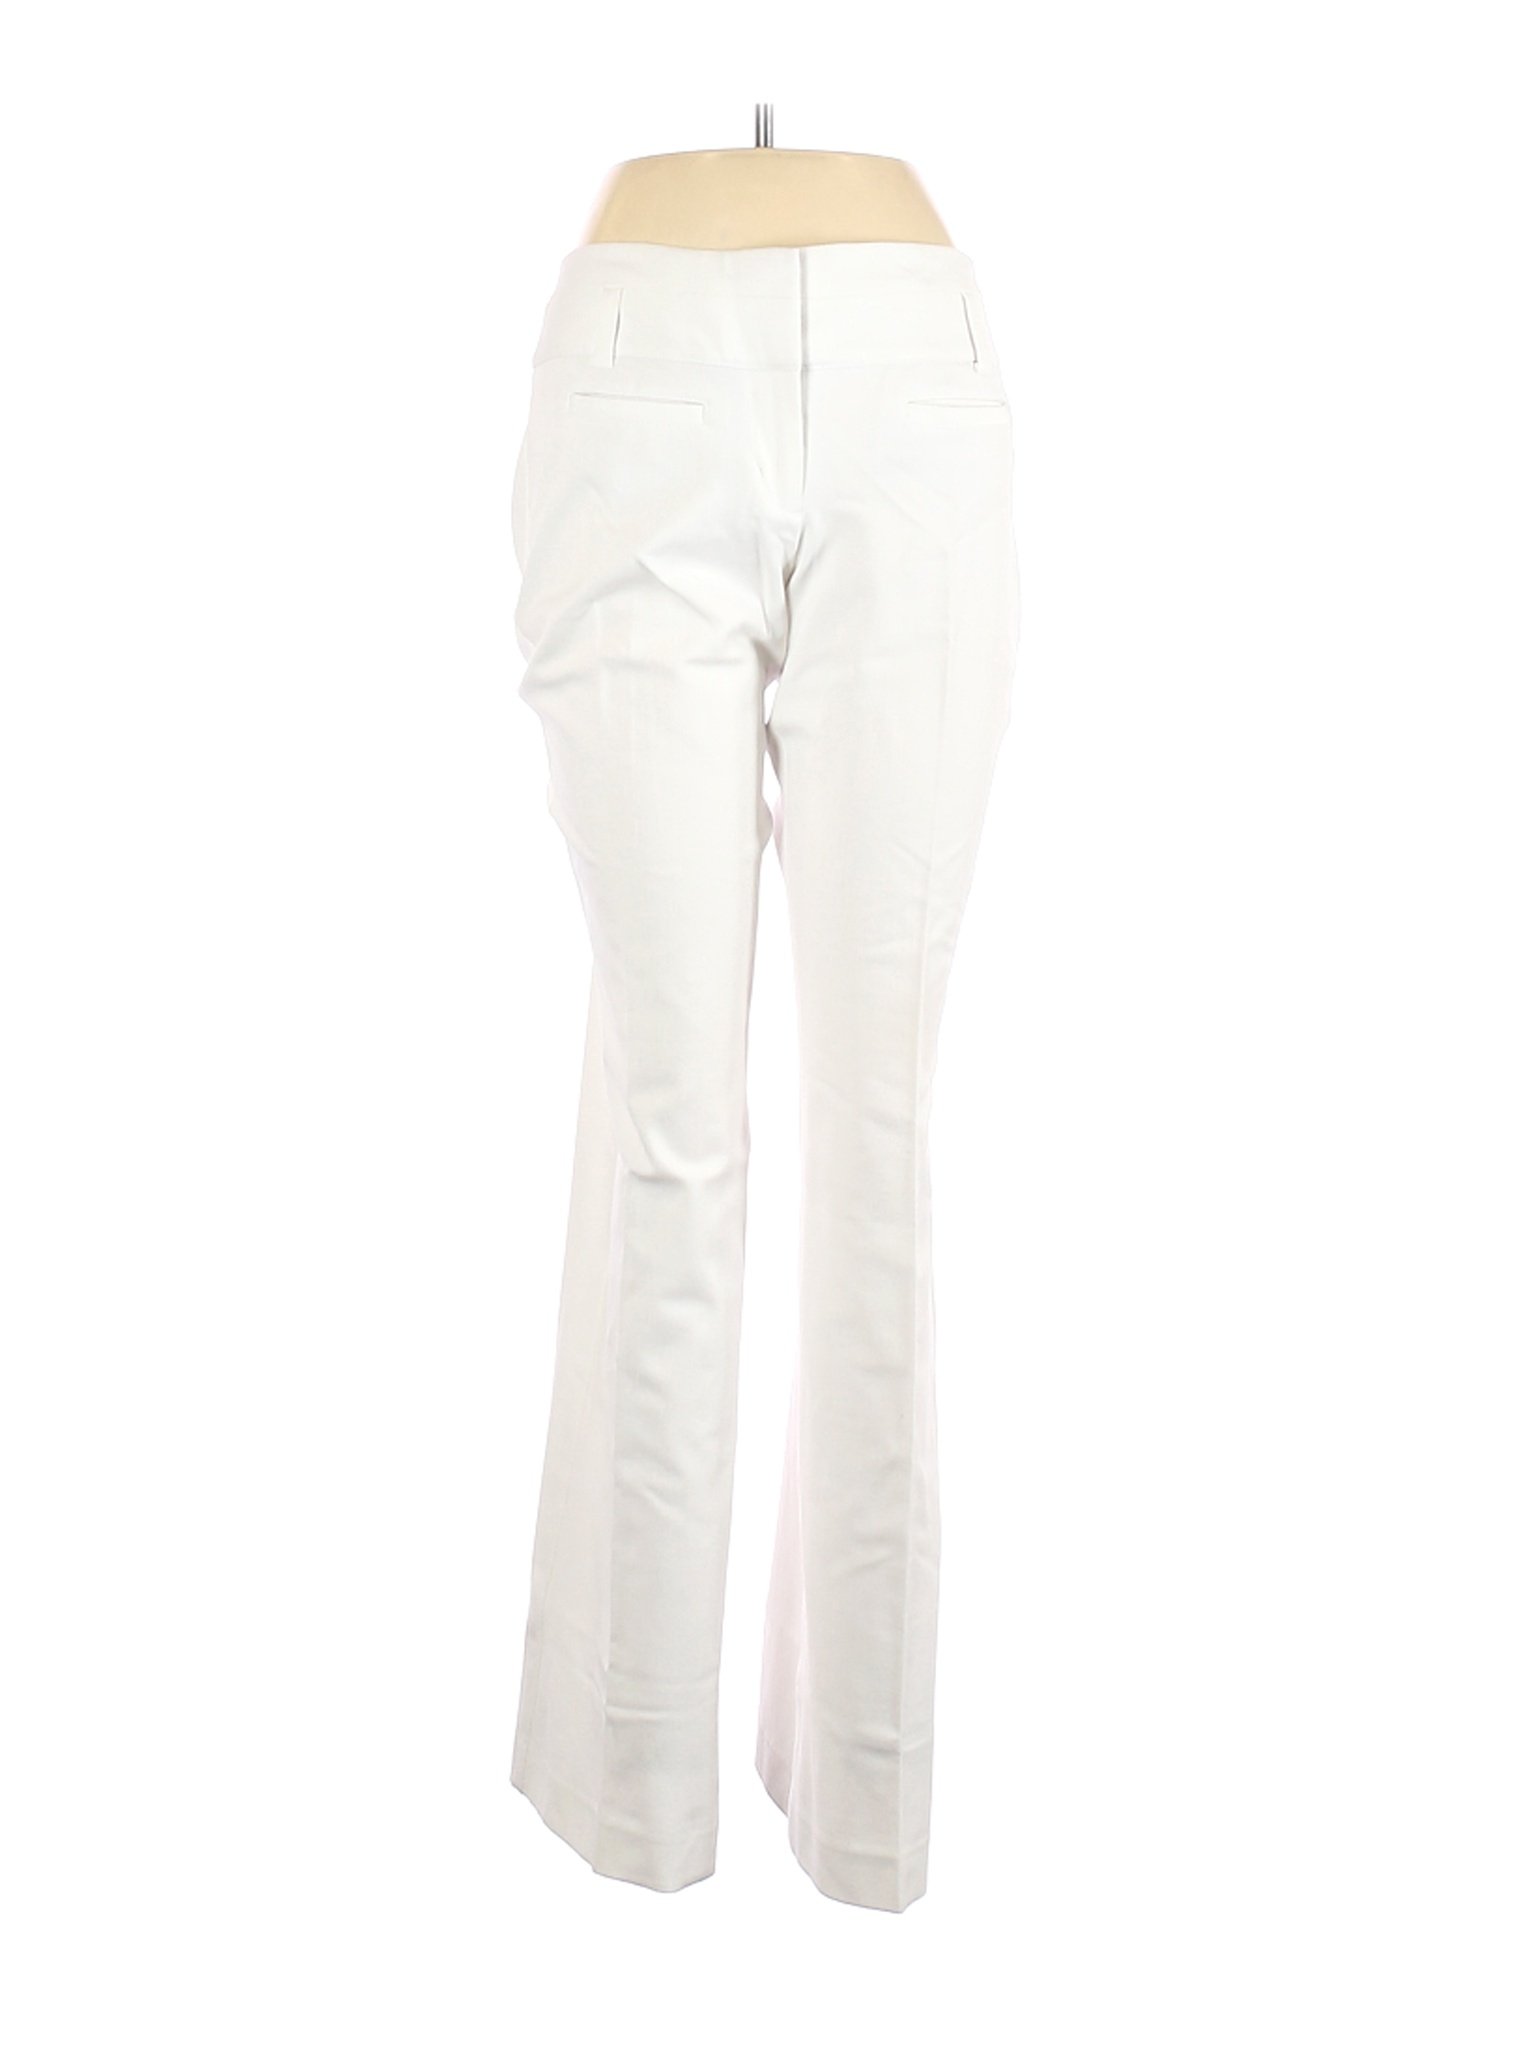 Express Women White Dress Pants 6 Tall | eBay